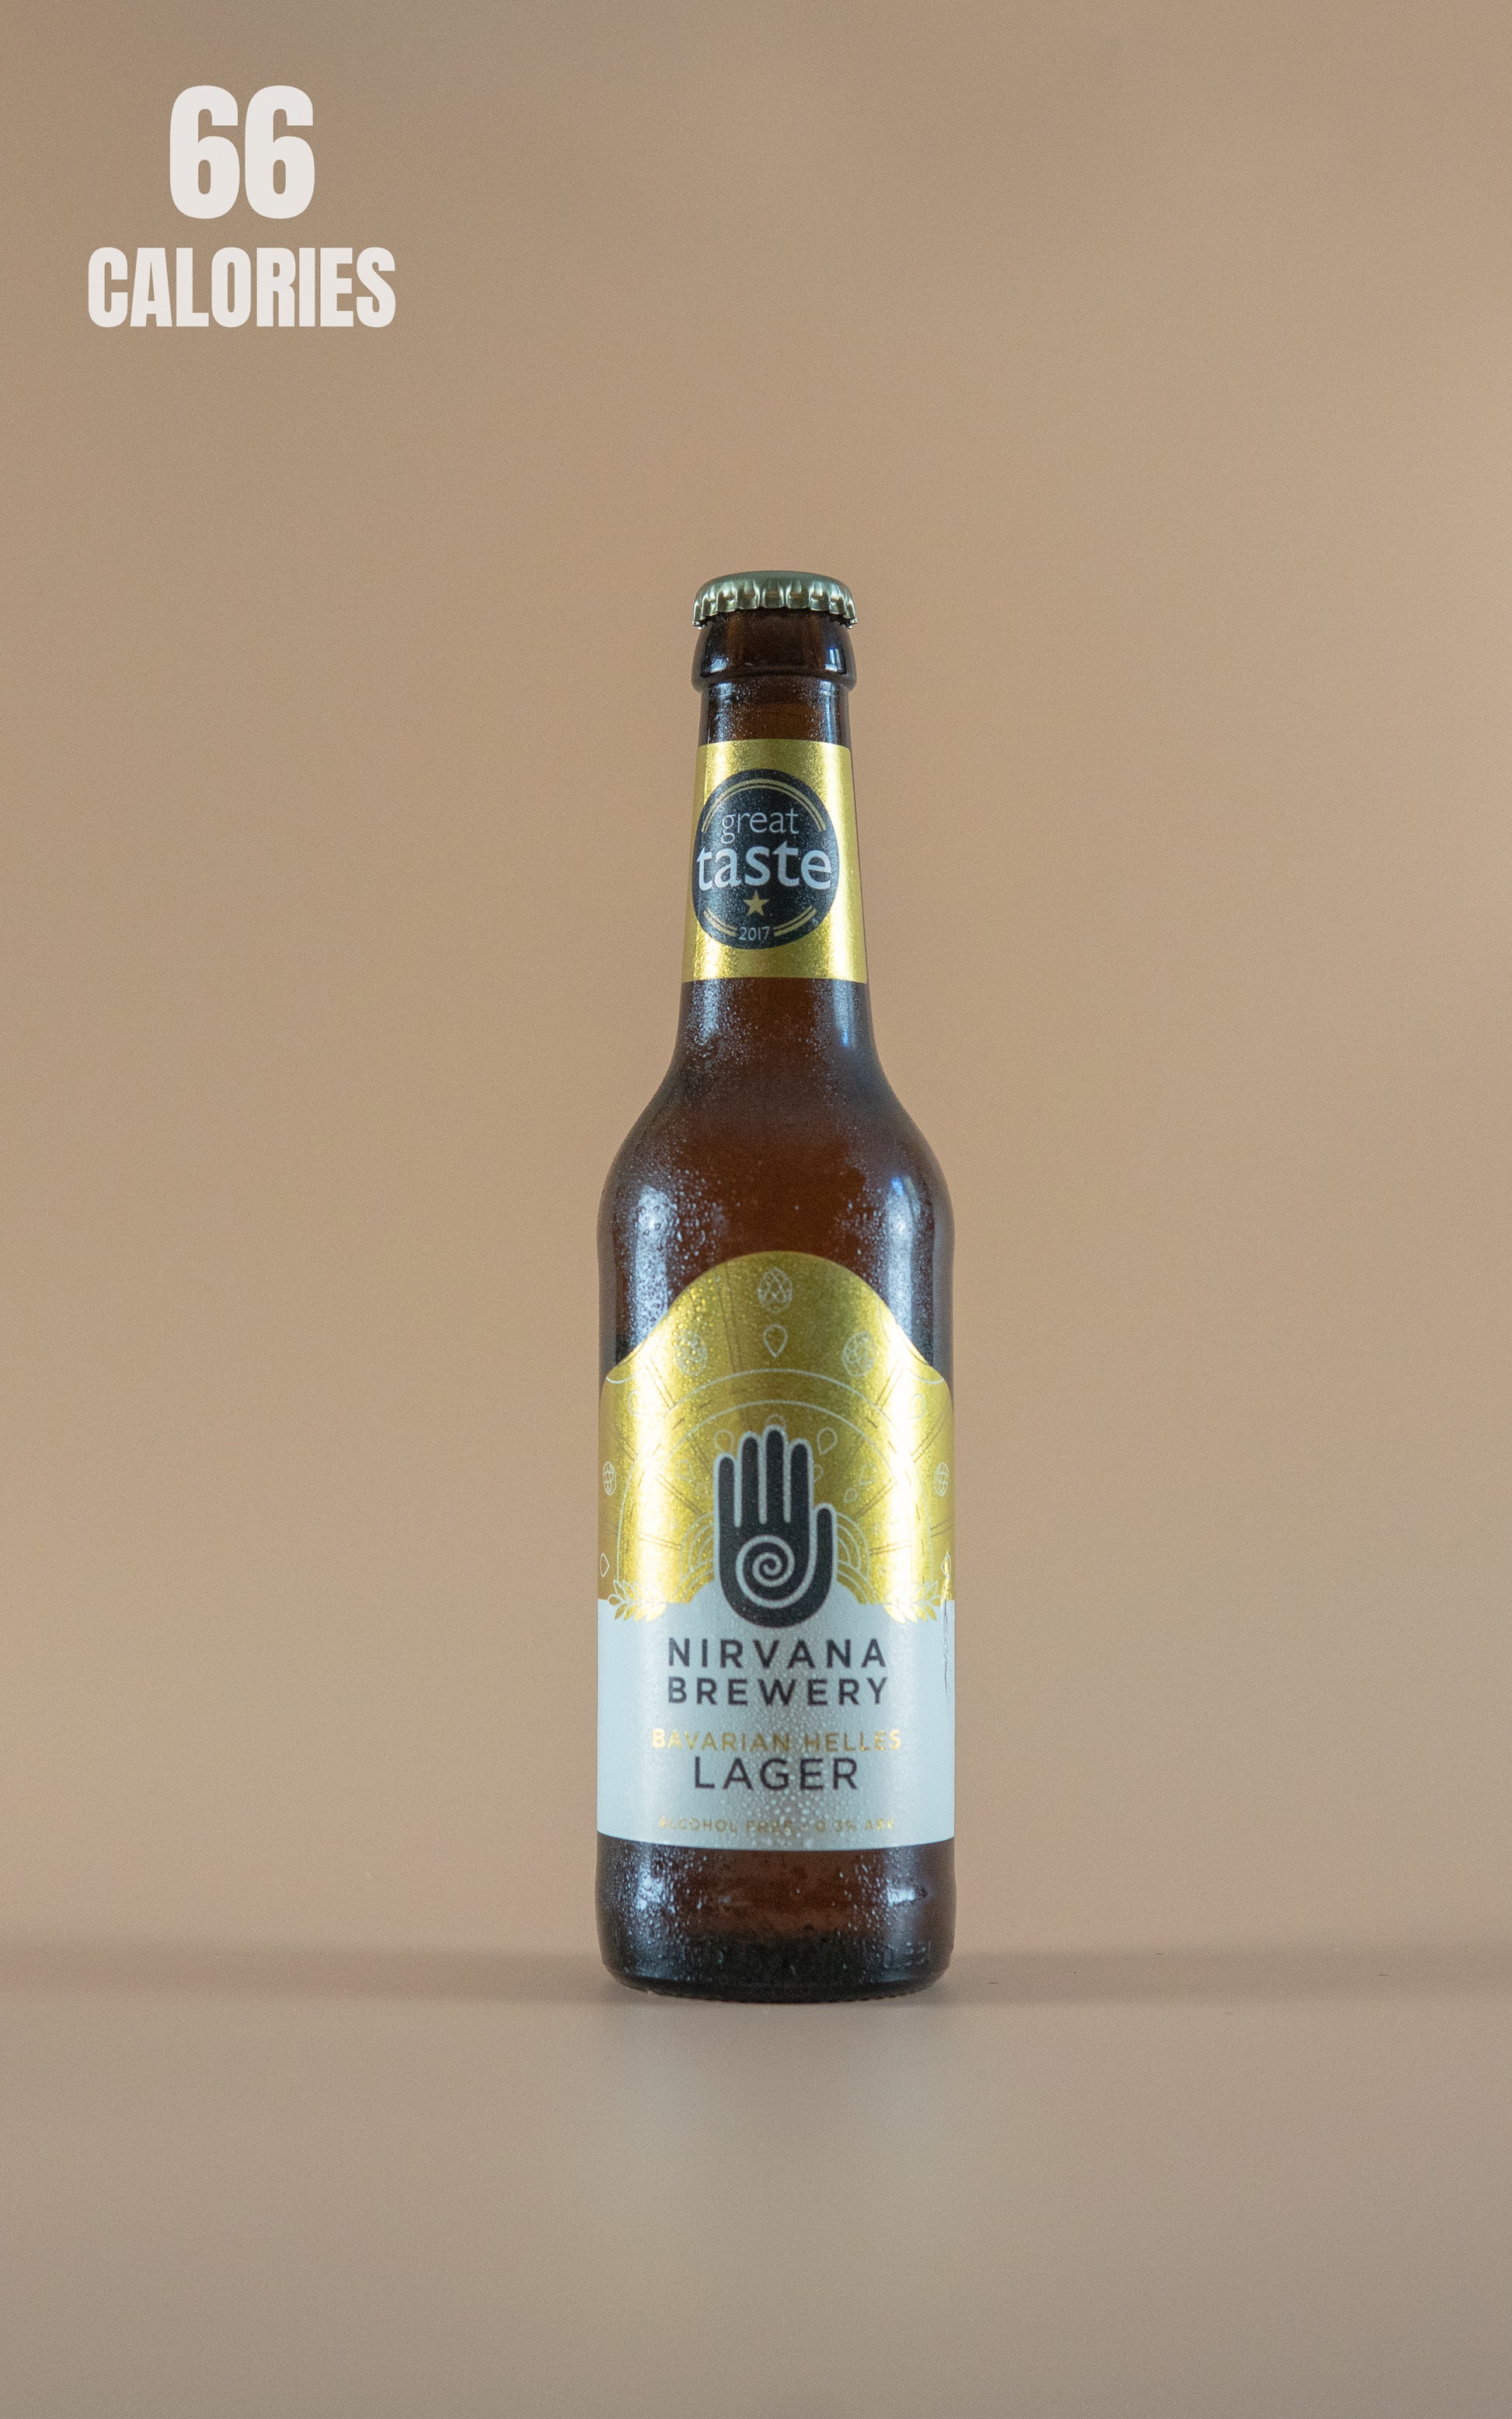 LightDrinks - Nirvana Brewery Bavarian Helles Lager Alcohol Free 0.3% - 330ml